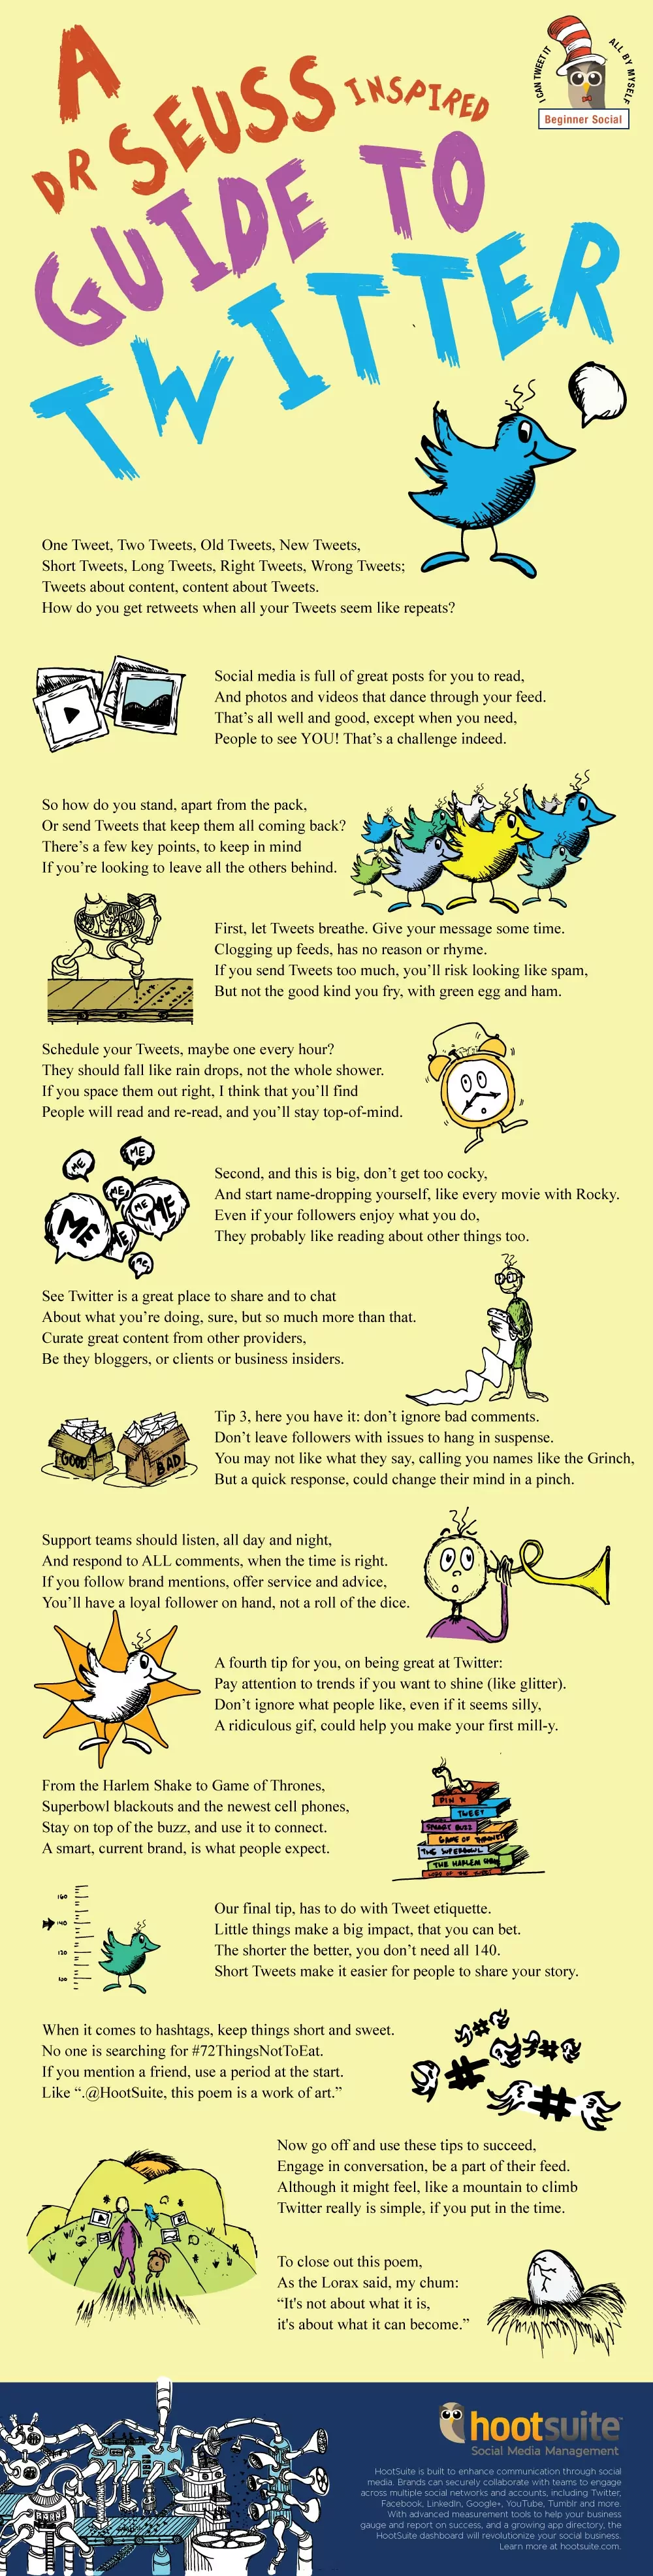 Dr Seuss Twitter Guide